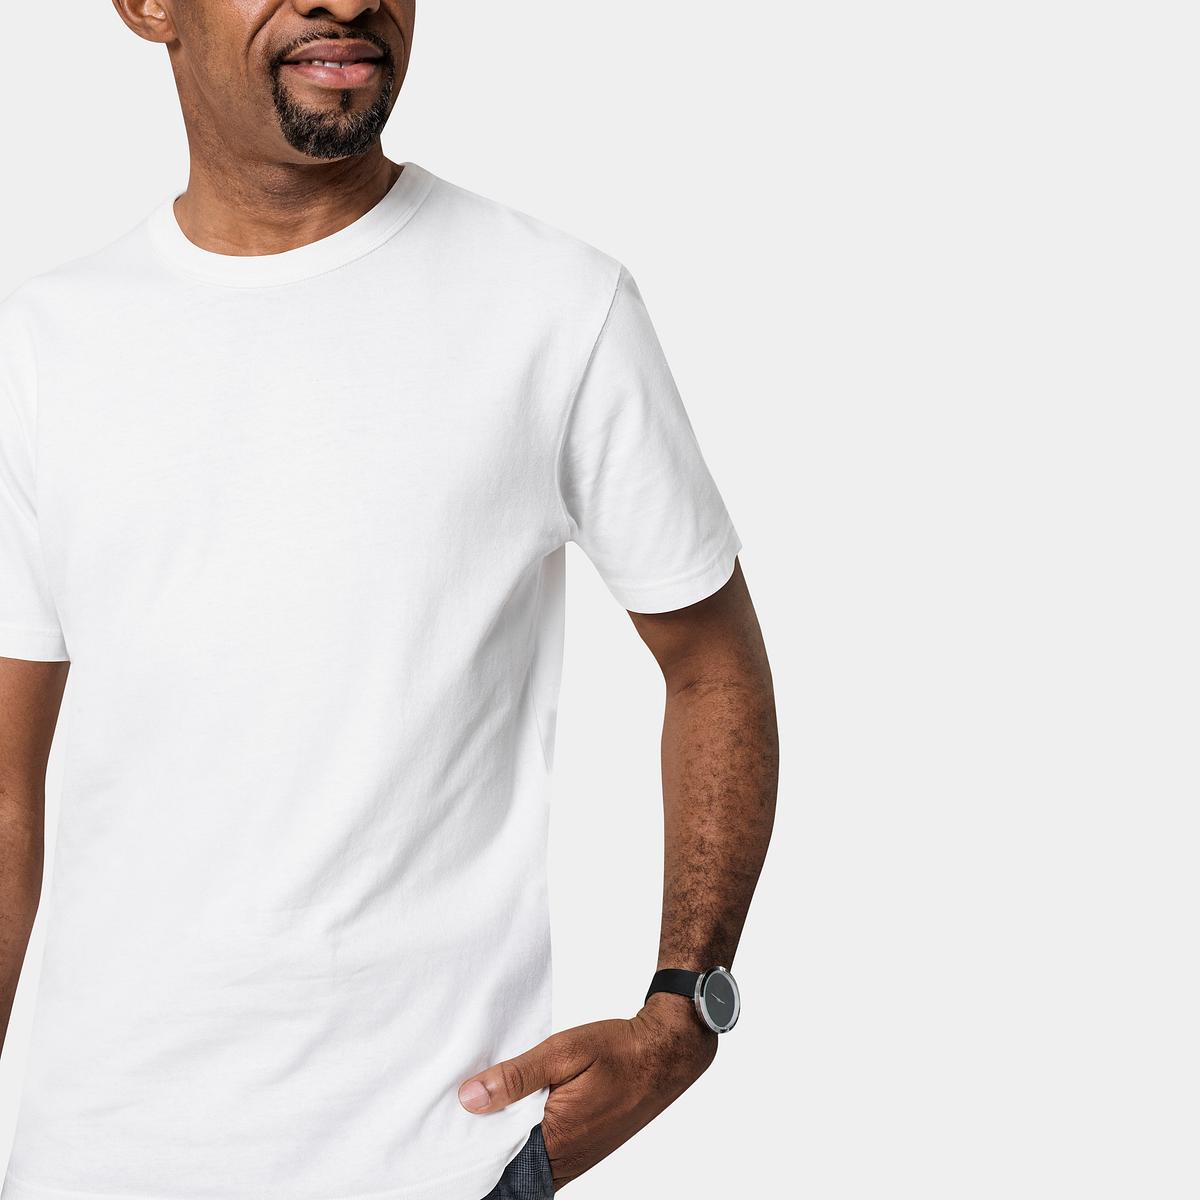 White t-shirt mockup psd on African | Premium PSD Mockup - rawpixel